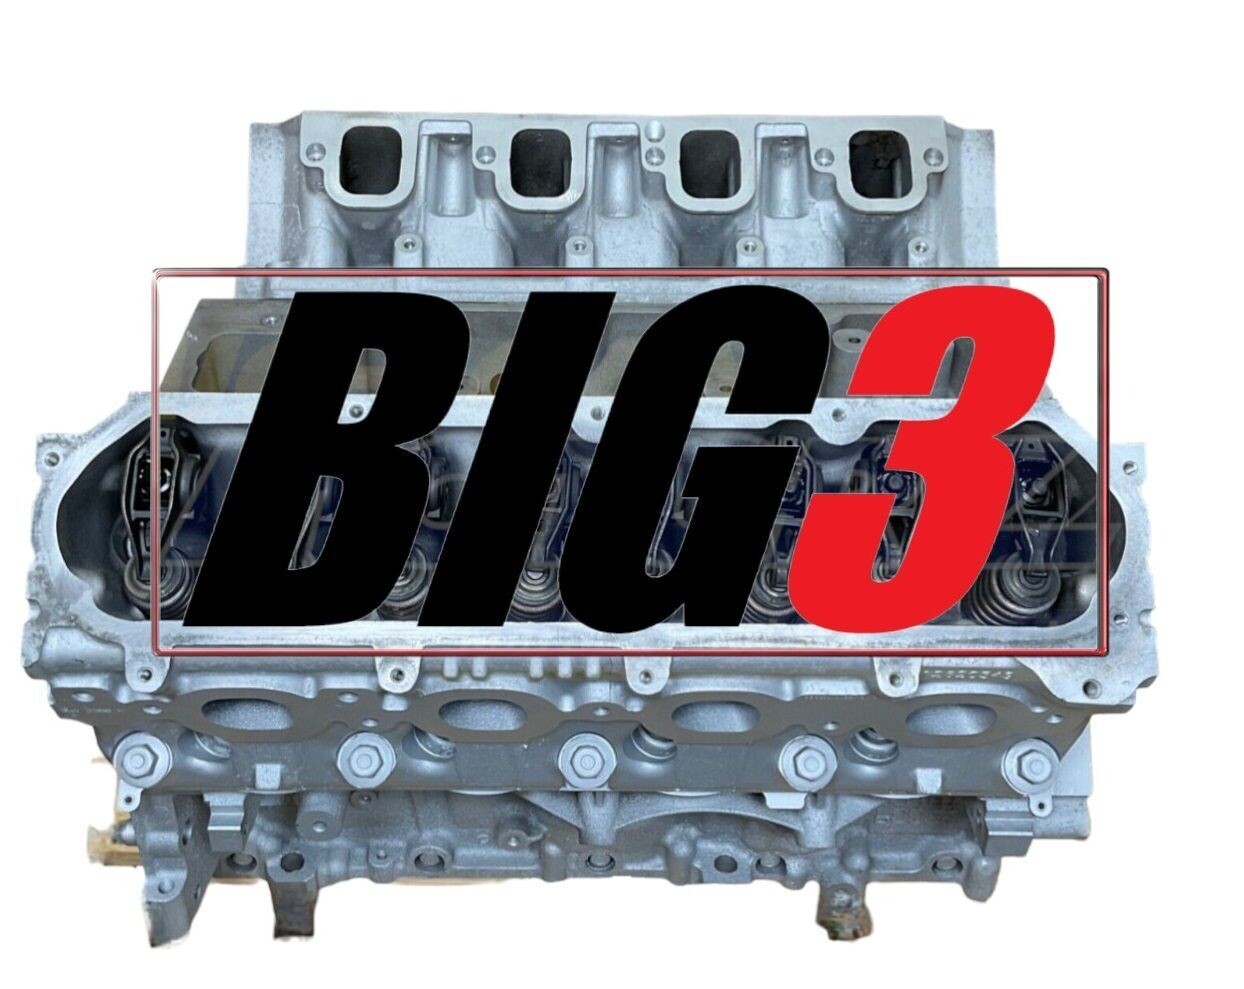 L86 GEN V ECOTEC3 6.2 ENGINE LONG BLOCK ASSEMBLY
2014 AND UP GM CHEVROLET AFM 4 YEAR PARTS WARRANTY